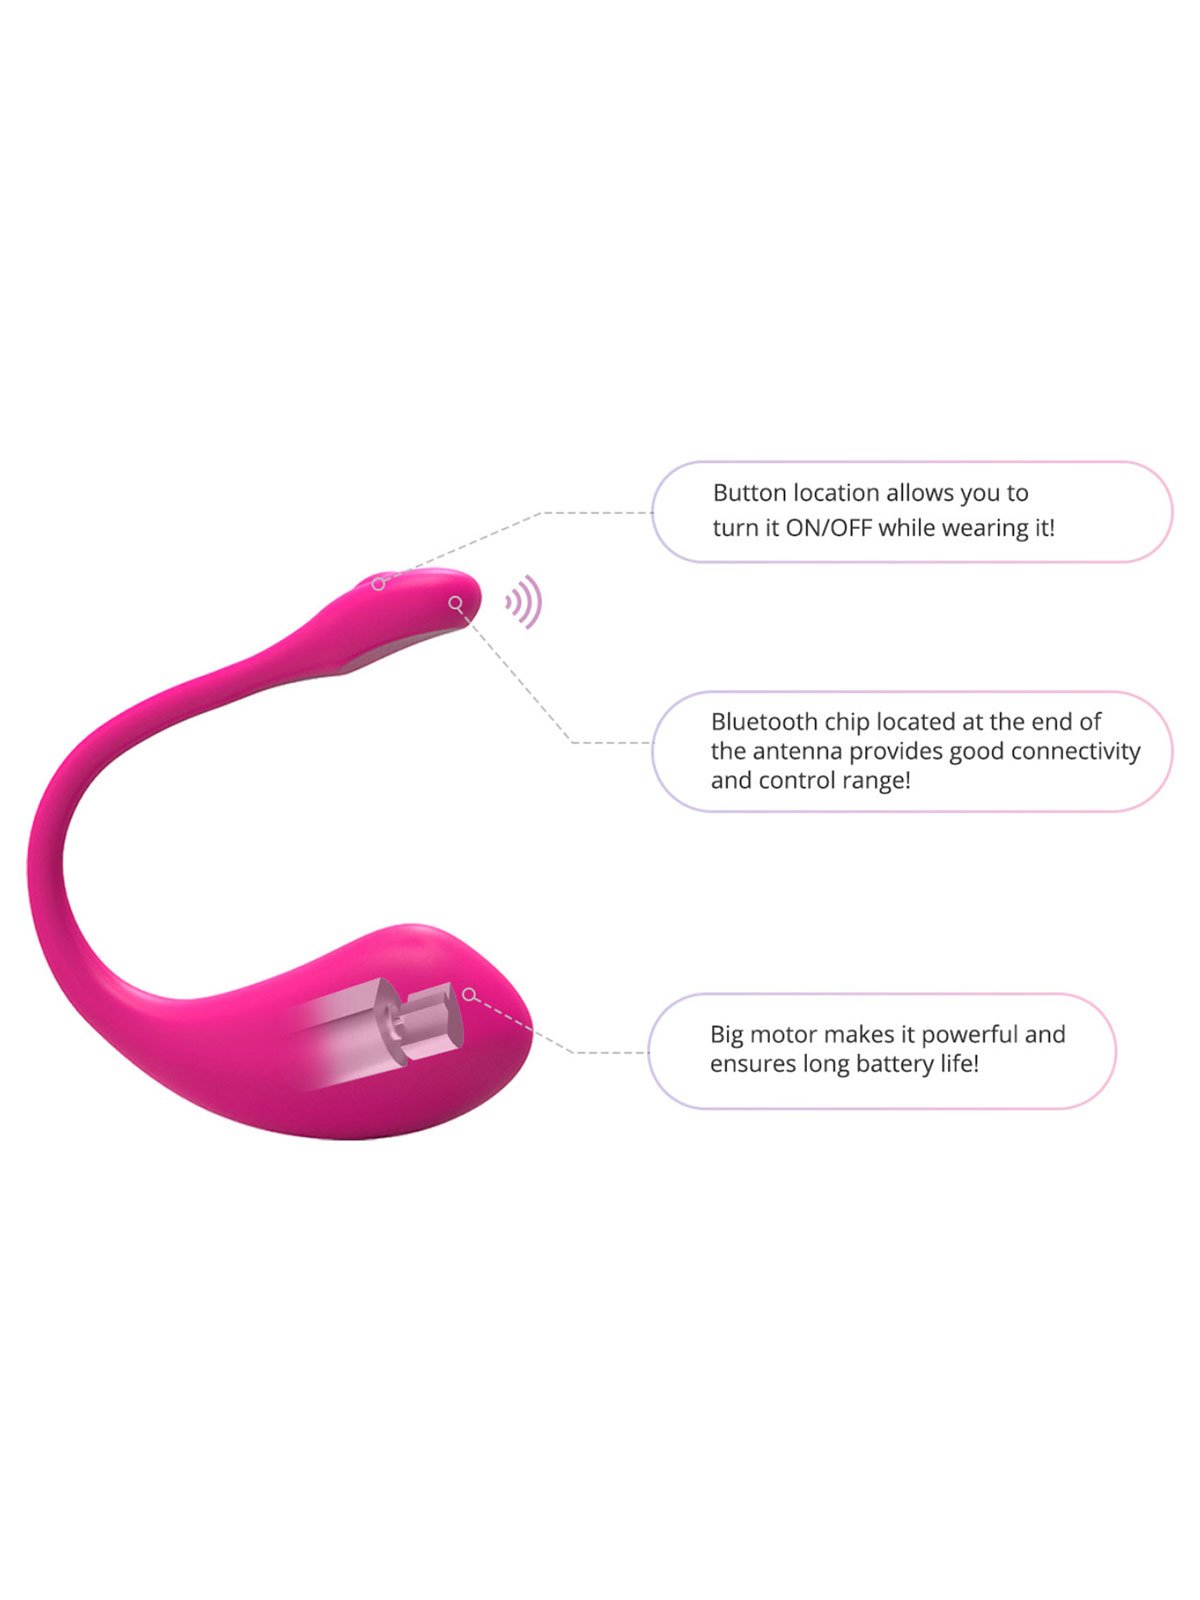  Plug Lush 2 - Bluetooth Vibrator | Pink